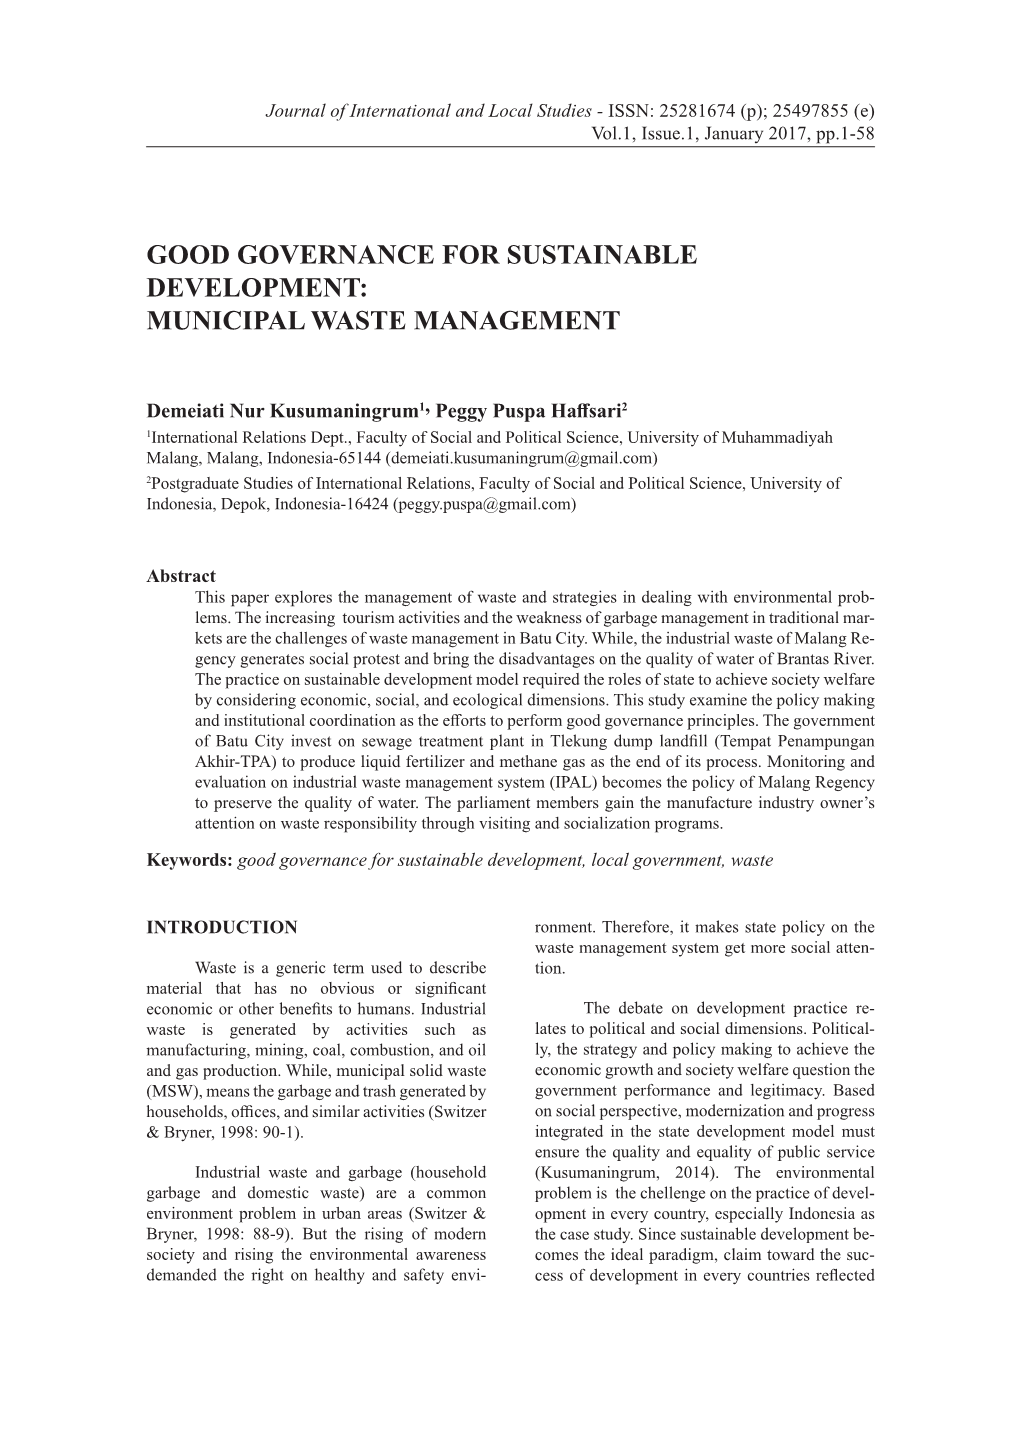 Good Governance for Sustainable Development: Municipal Waste Management